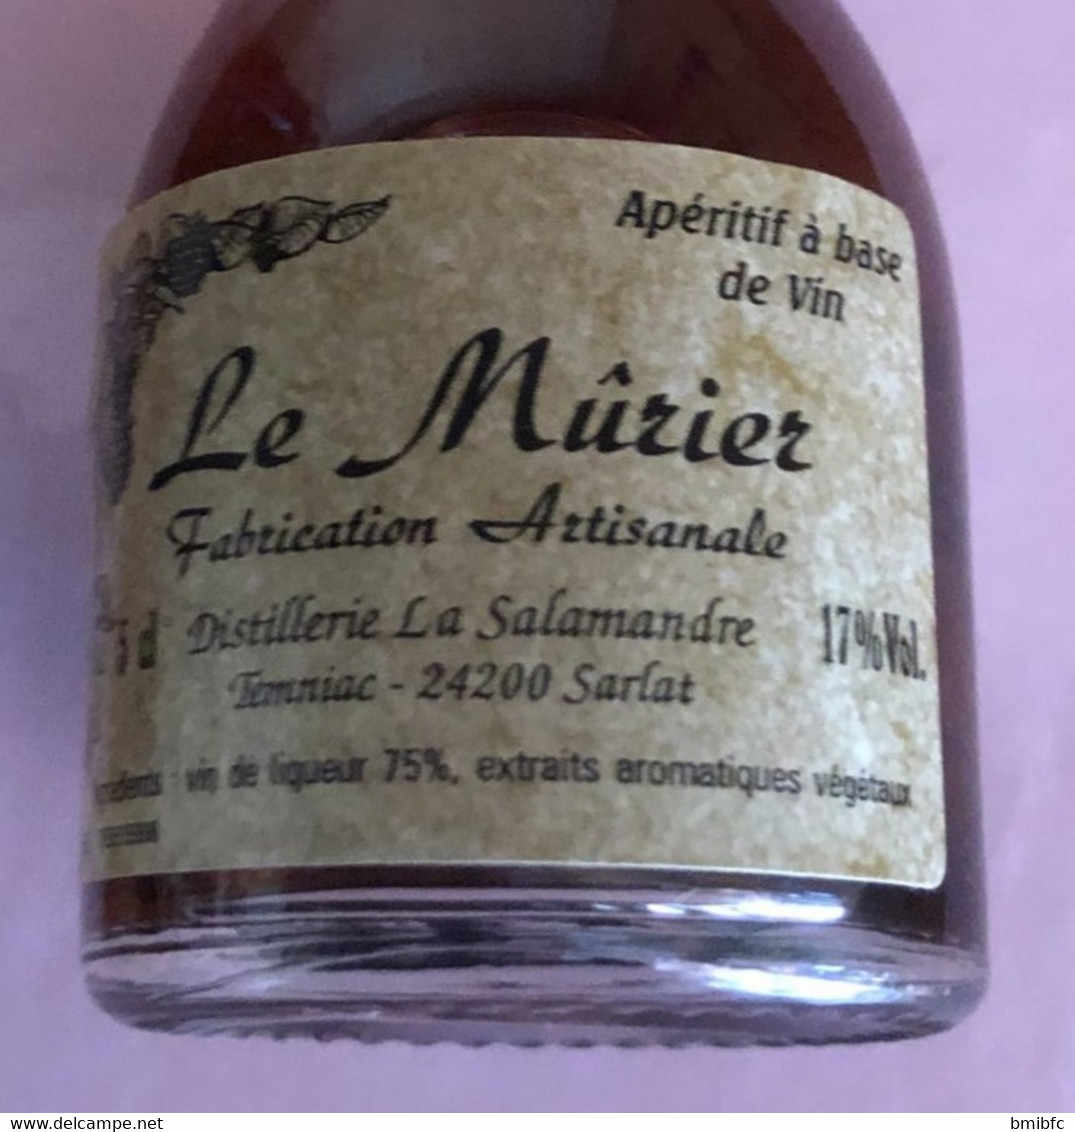 Le  Mûrier Fabrication Artisanale Distillerie La Salamandre  -  Temniac  - 24200 SARLAT - 5cl - 17% Vol - Miniflesjes